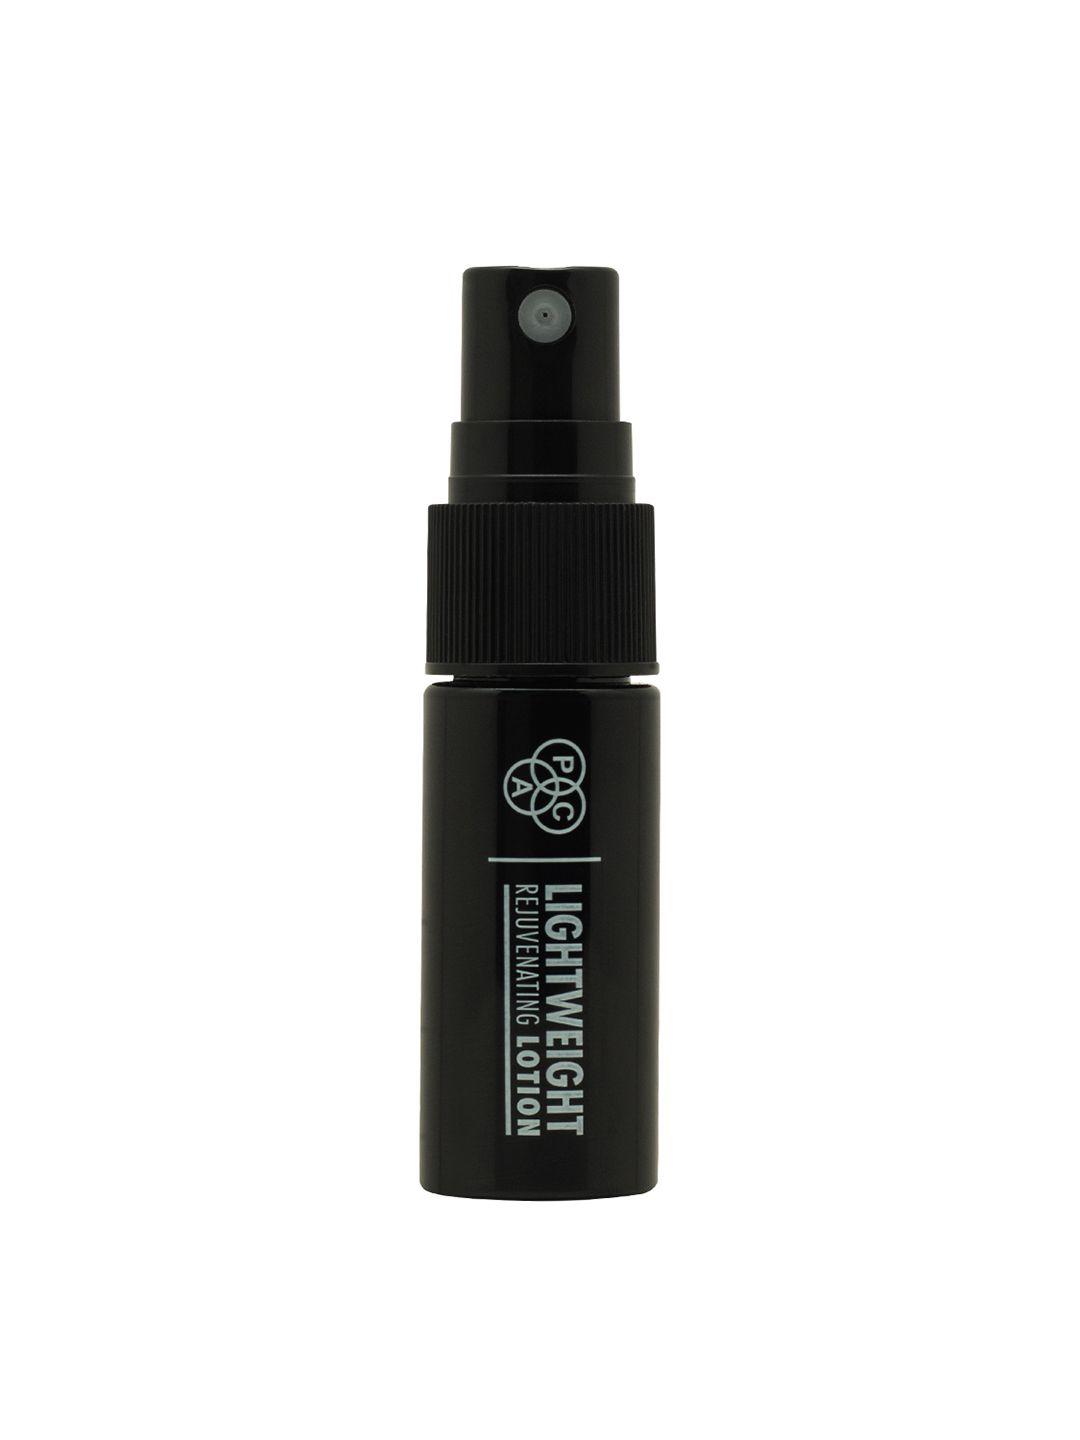 pac lightweight rejuvenating lotion makeup fixer mini with niacinamide - 10ml